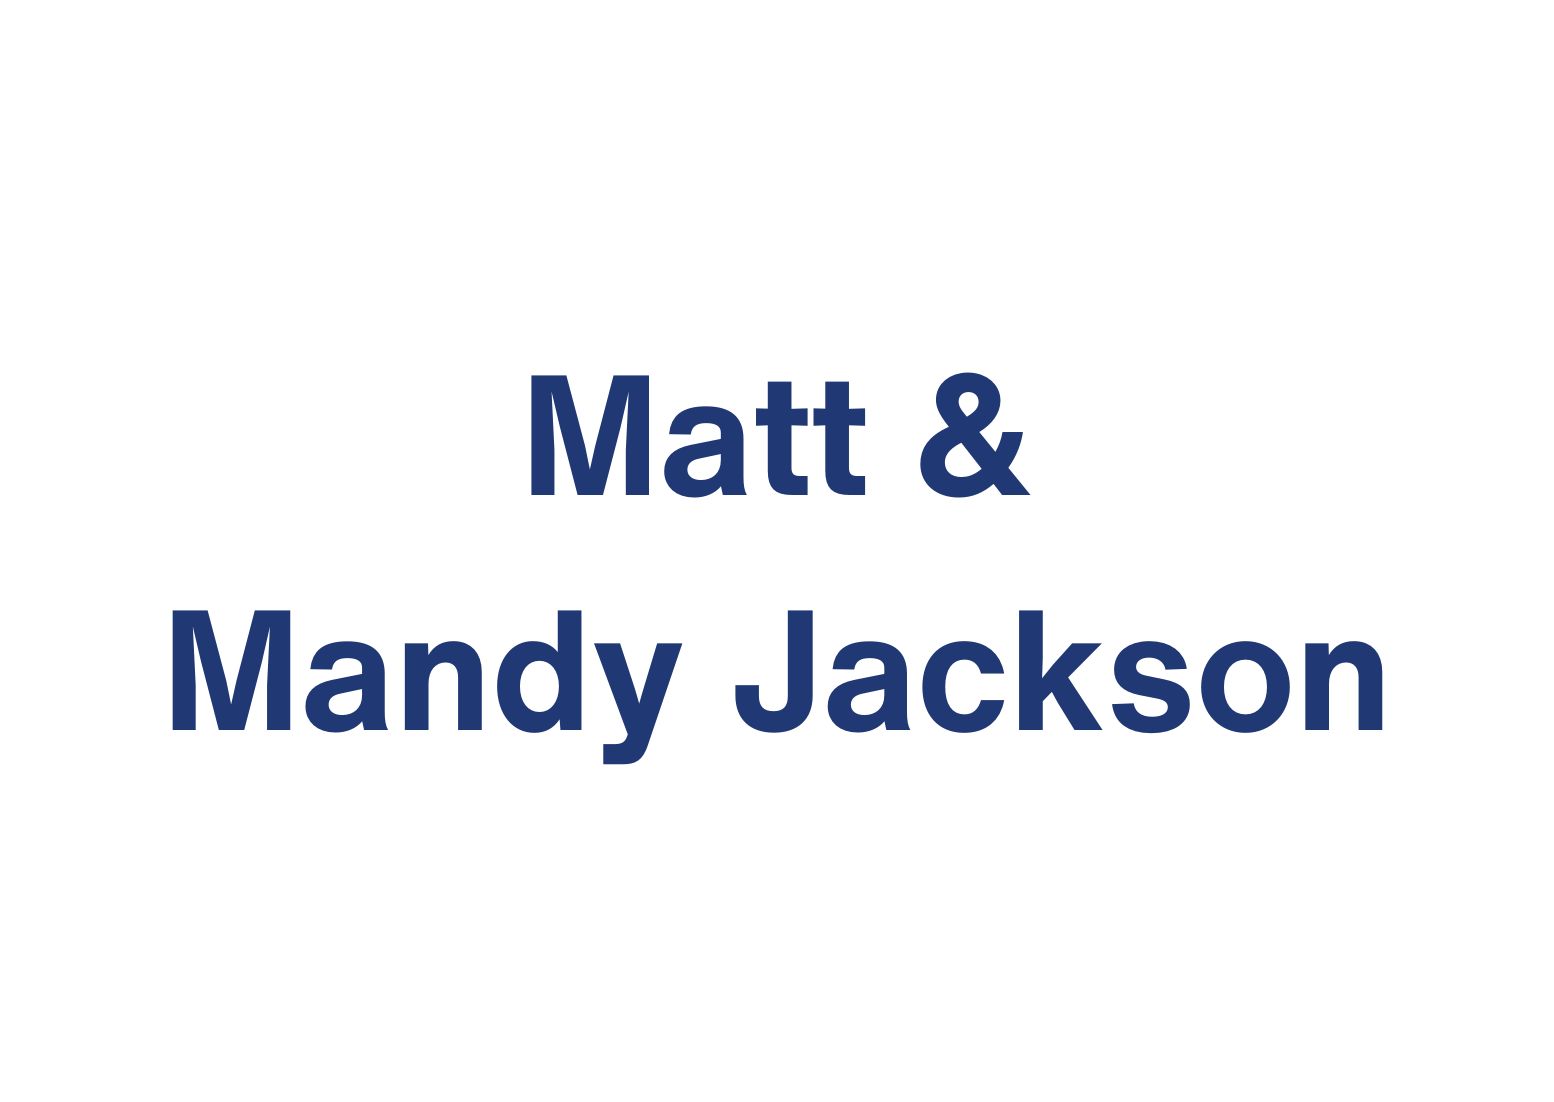 Matt & Mandy Jackson